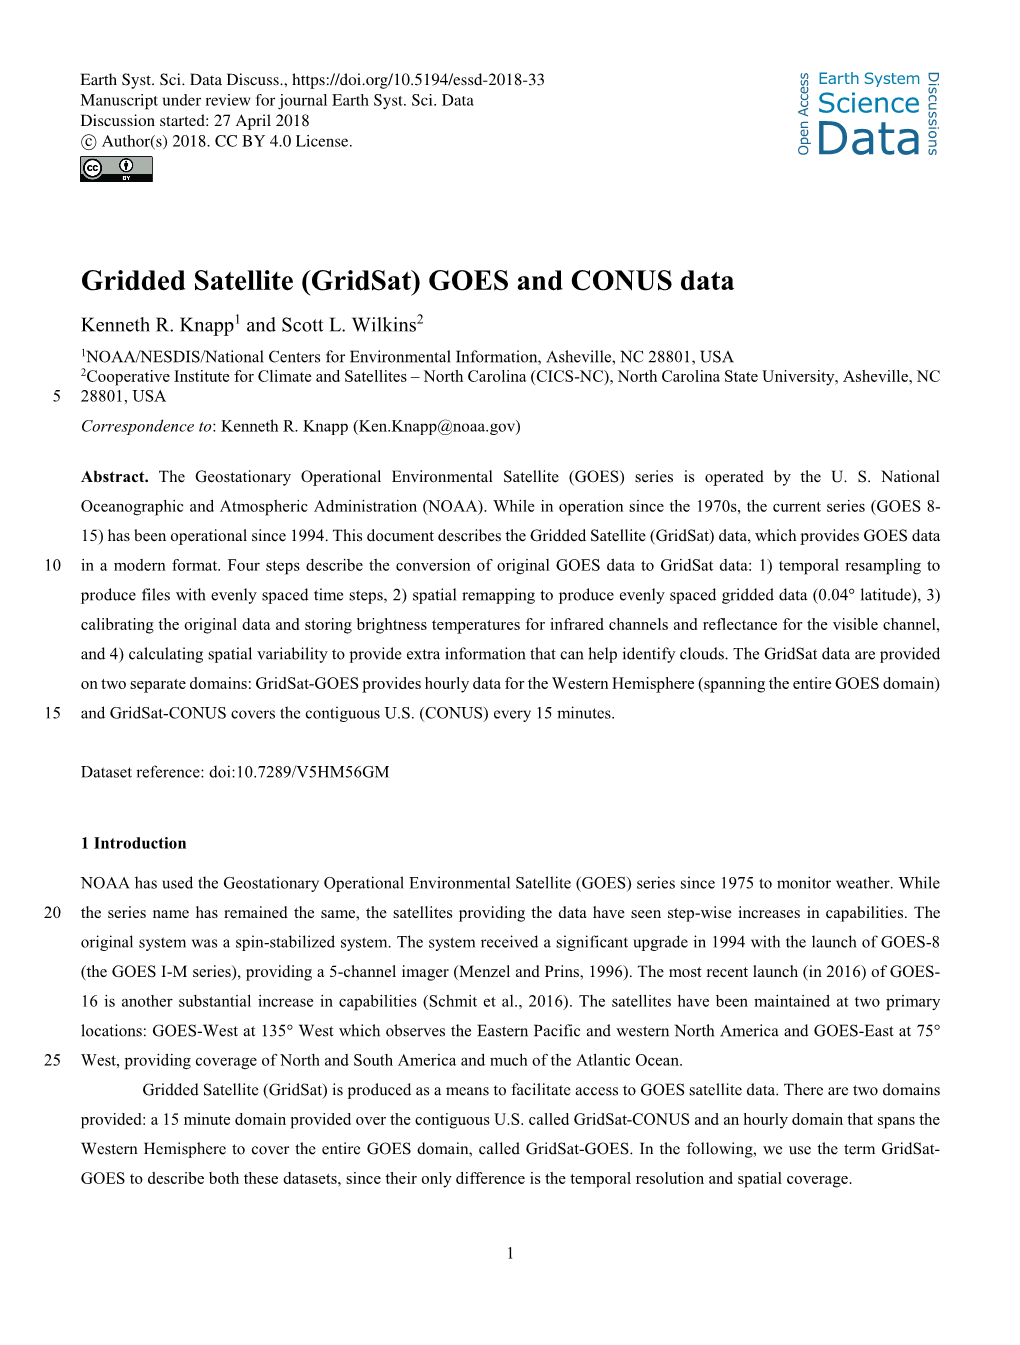 Gridded Satellite (Gridsat) GOES and CONUS Data Kenneth R